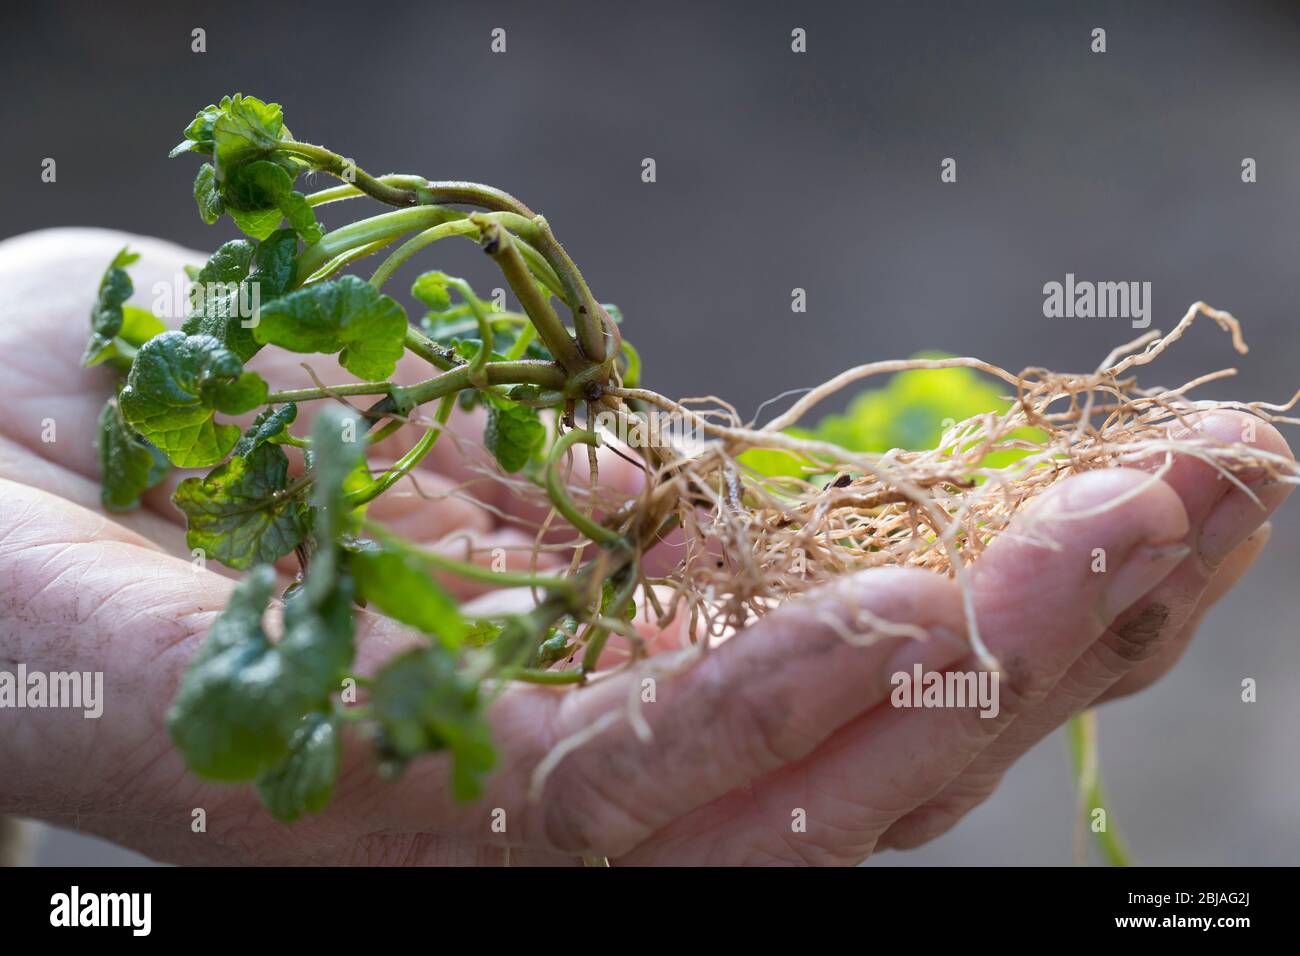 gill-over-the-ground, Ground Efeu (Glechoma hederacea), Roots, Deutschland Stockfoto